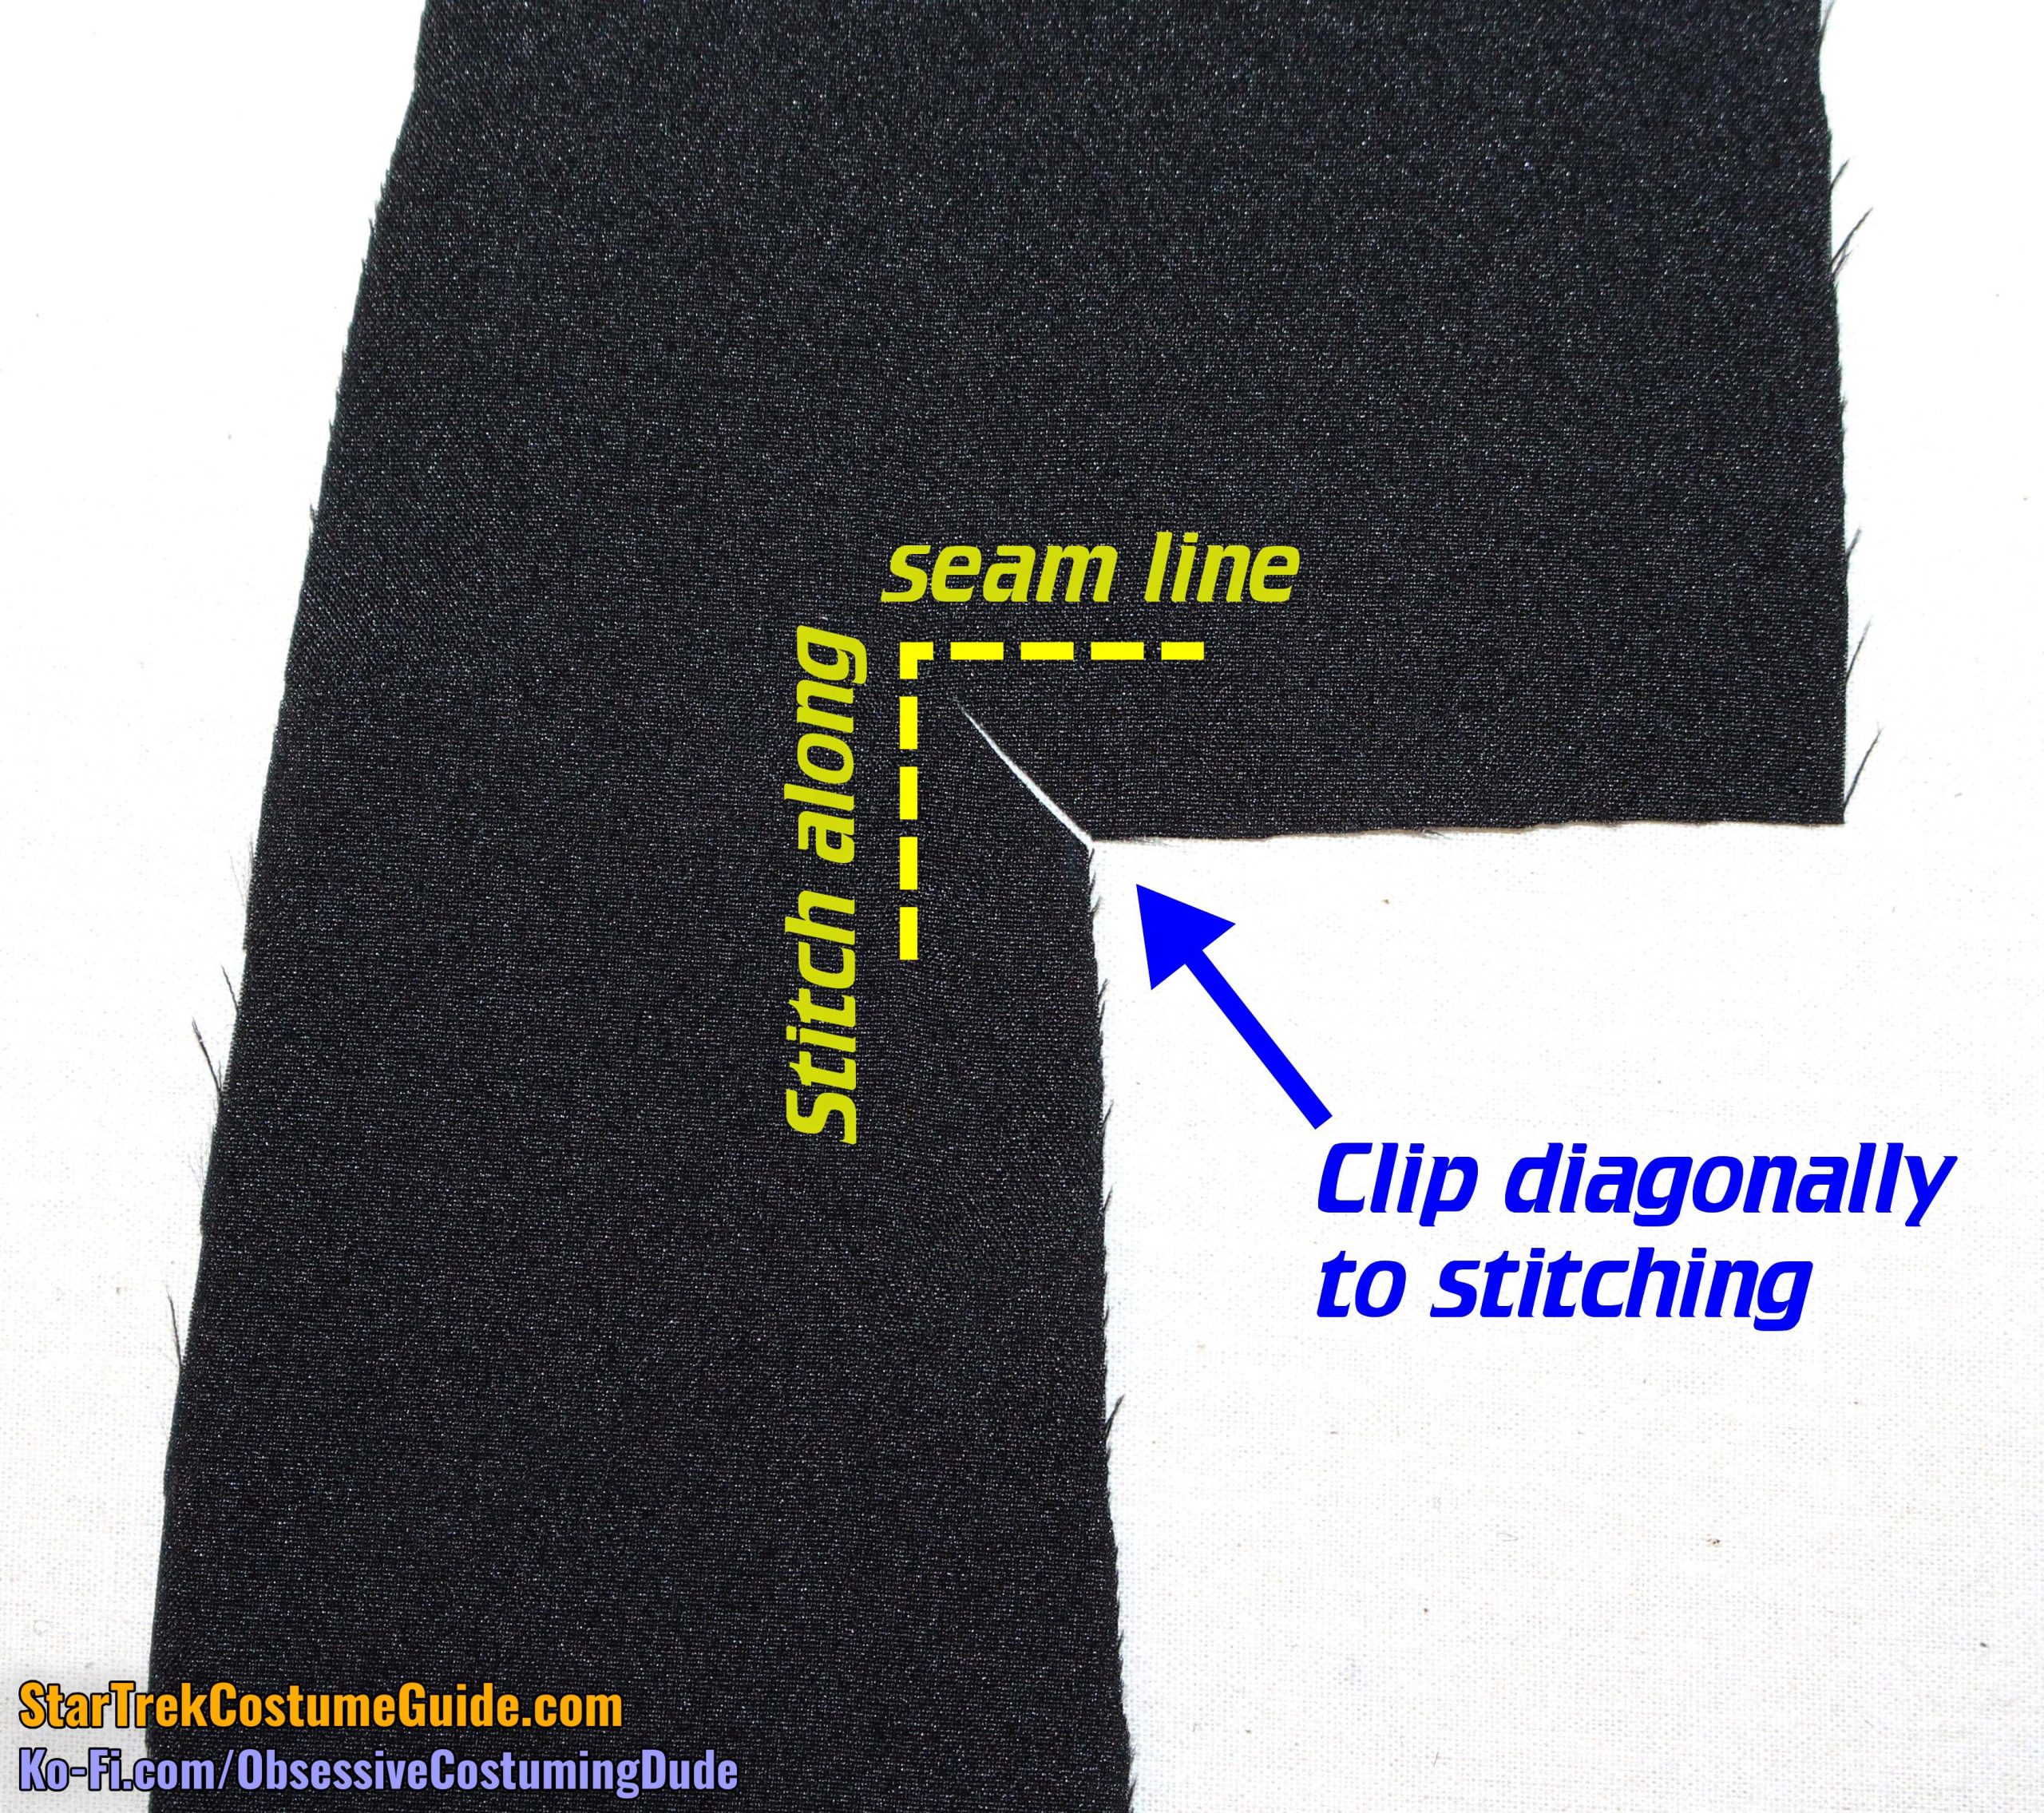 TNG medical smock sewing tutorial - Star Trek Costume Guide